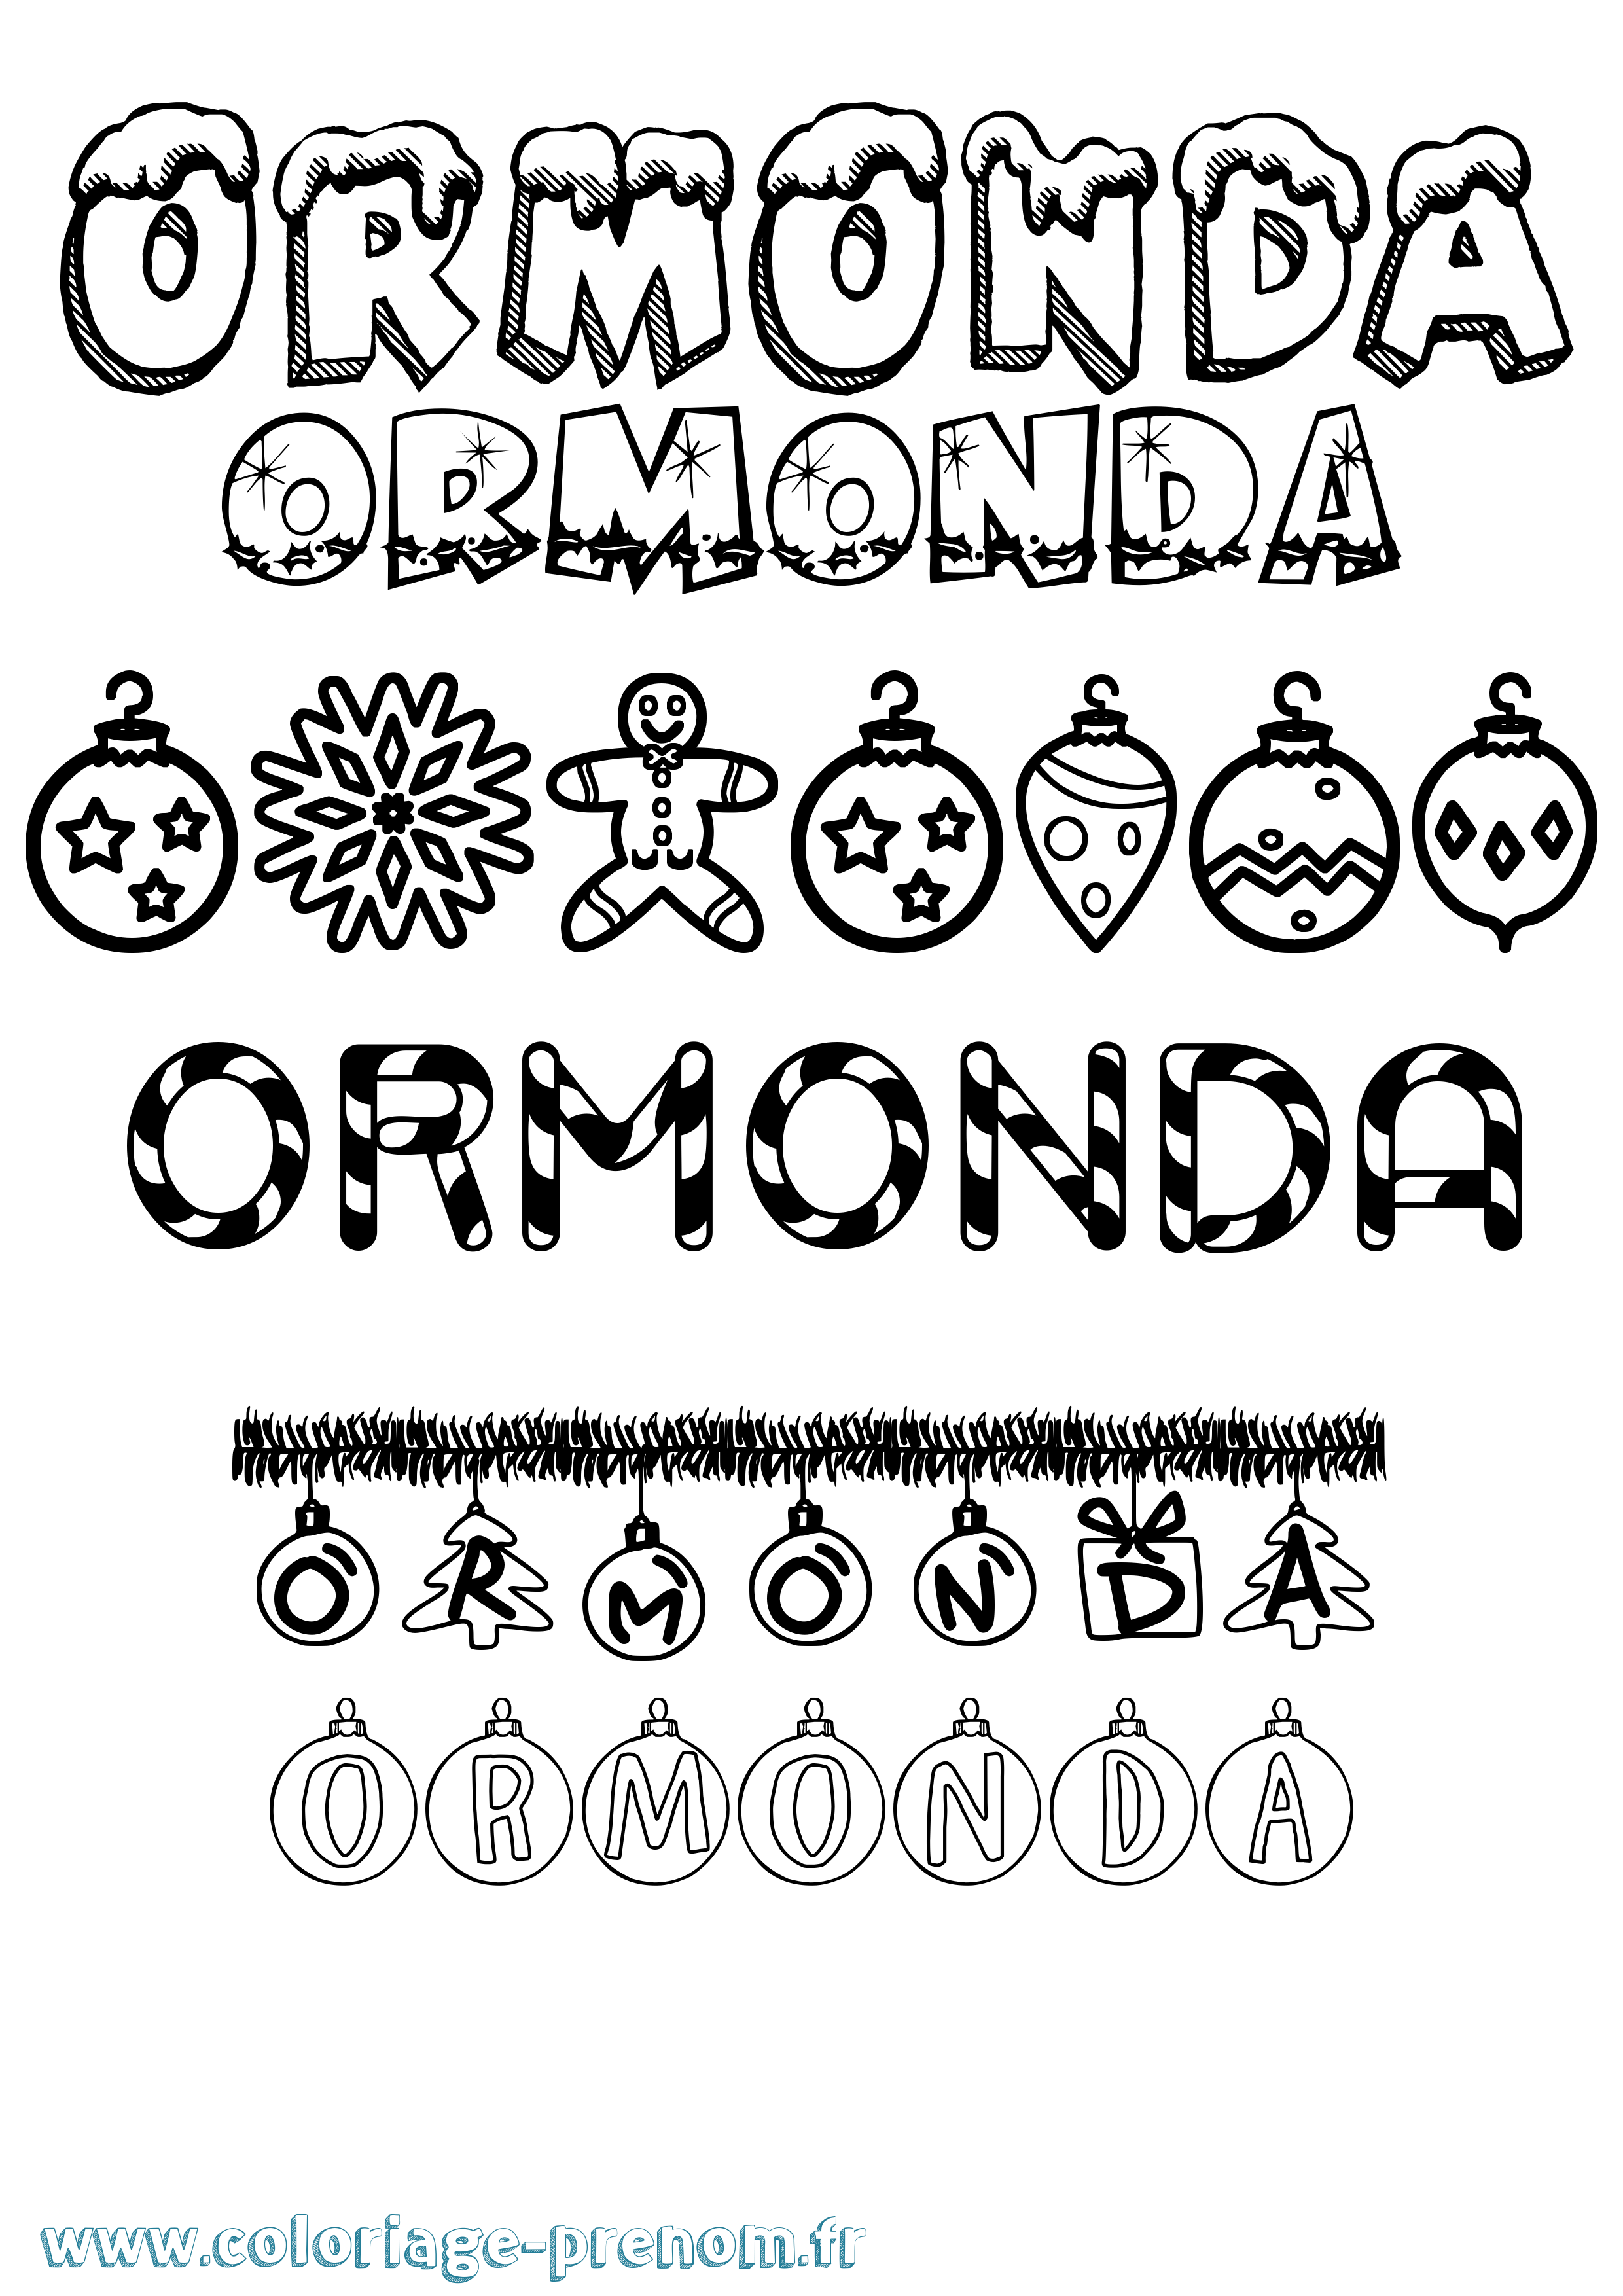 Coloriage prénom Ormonda Noël